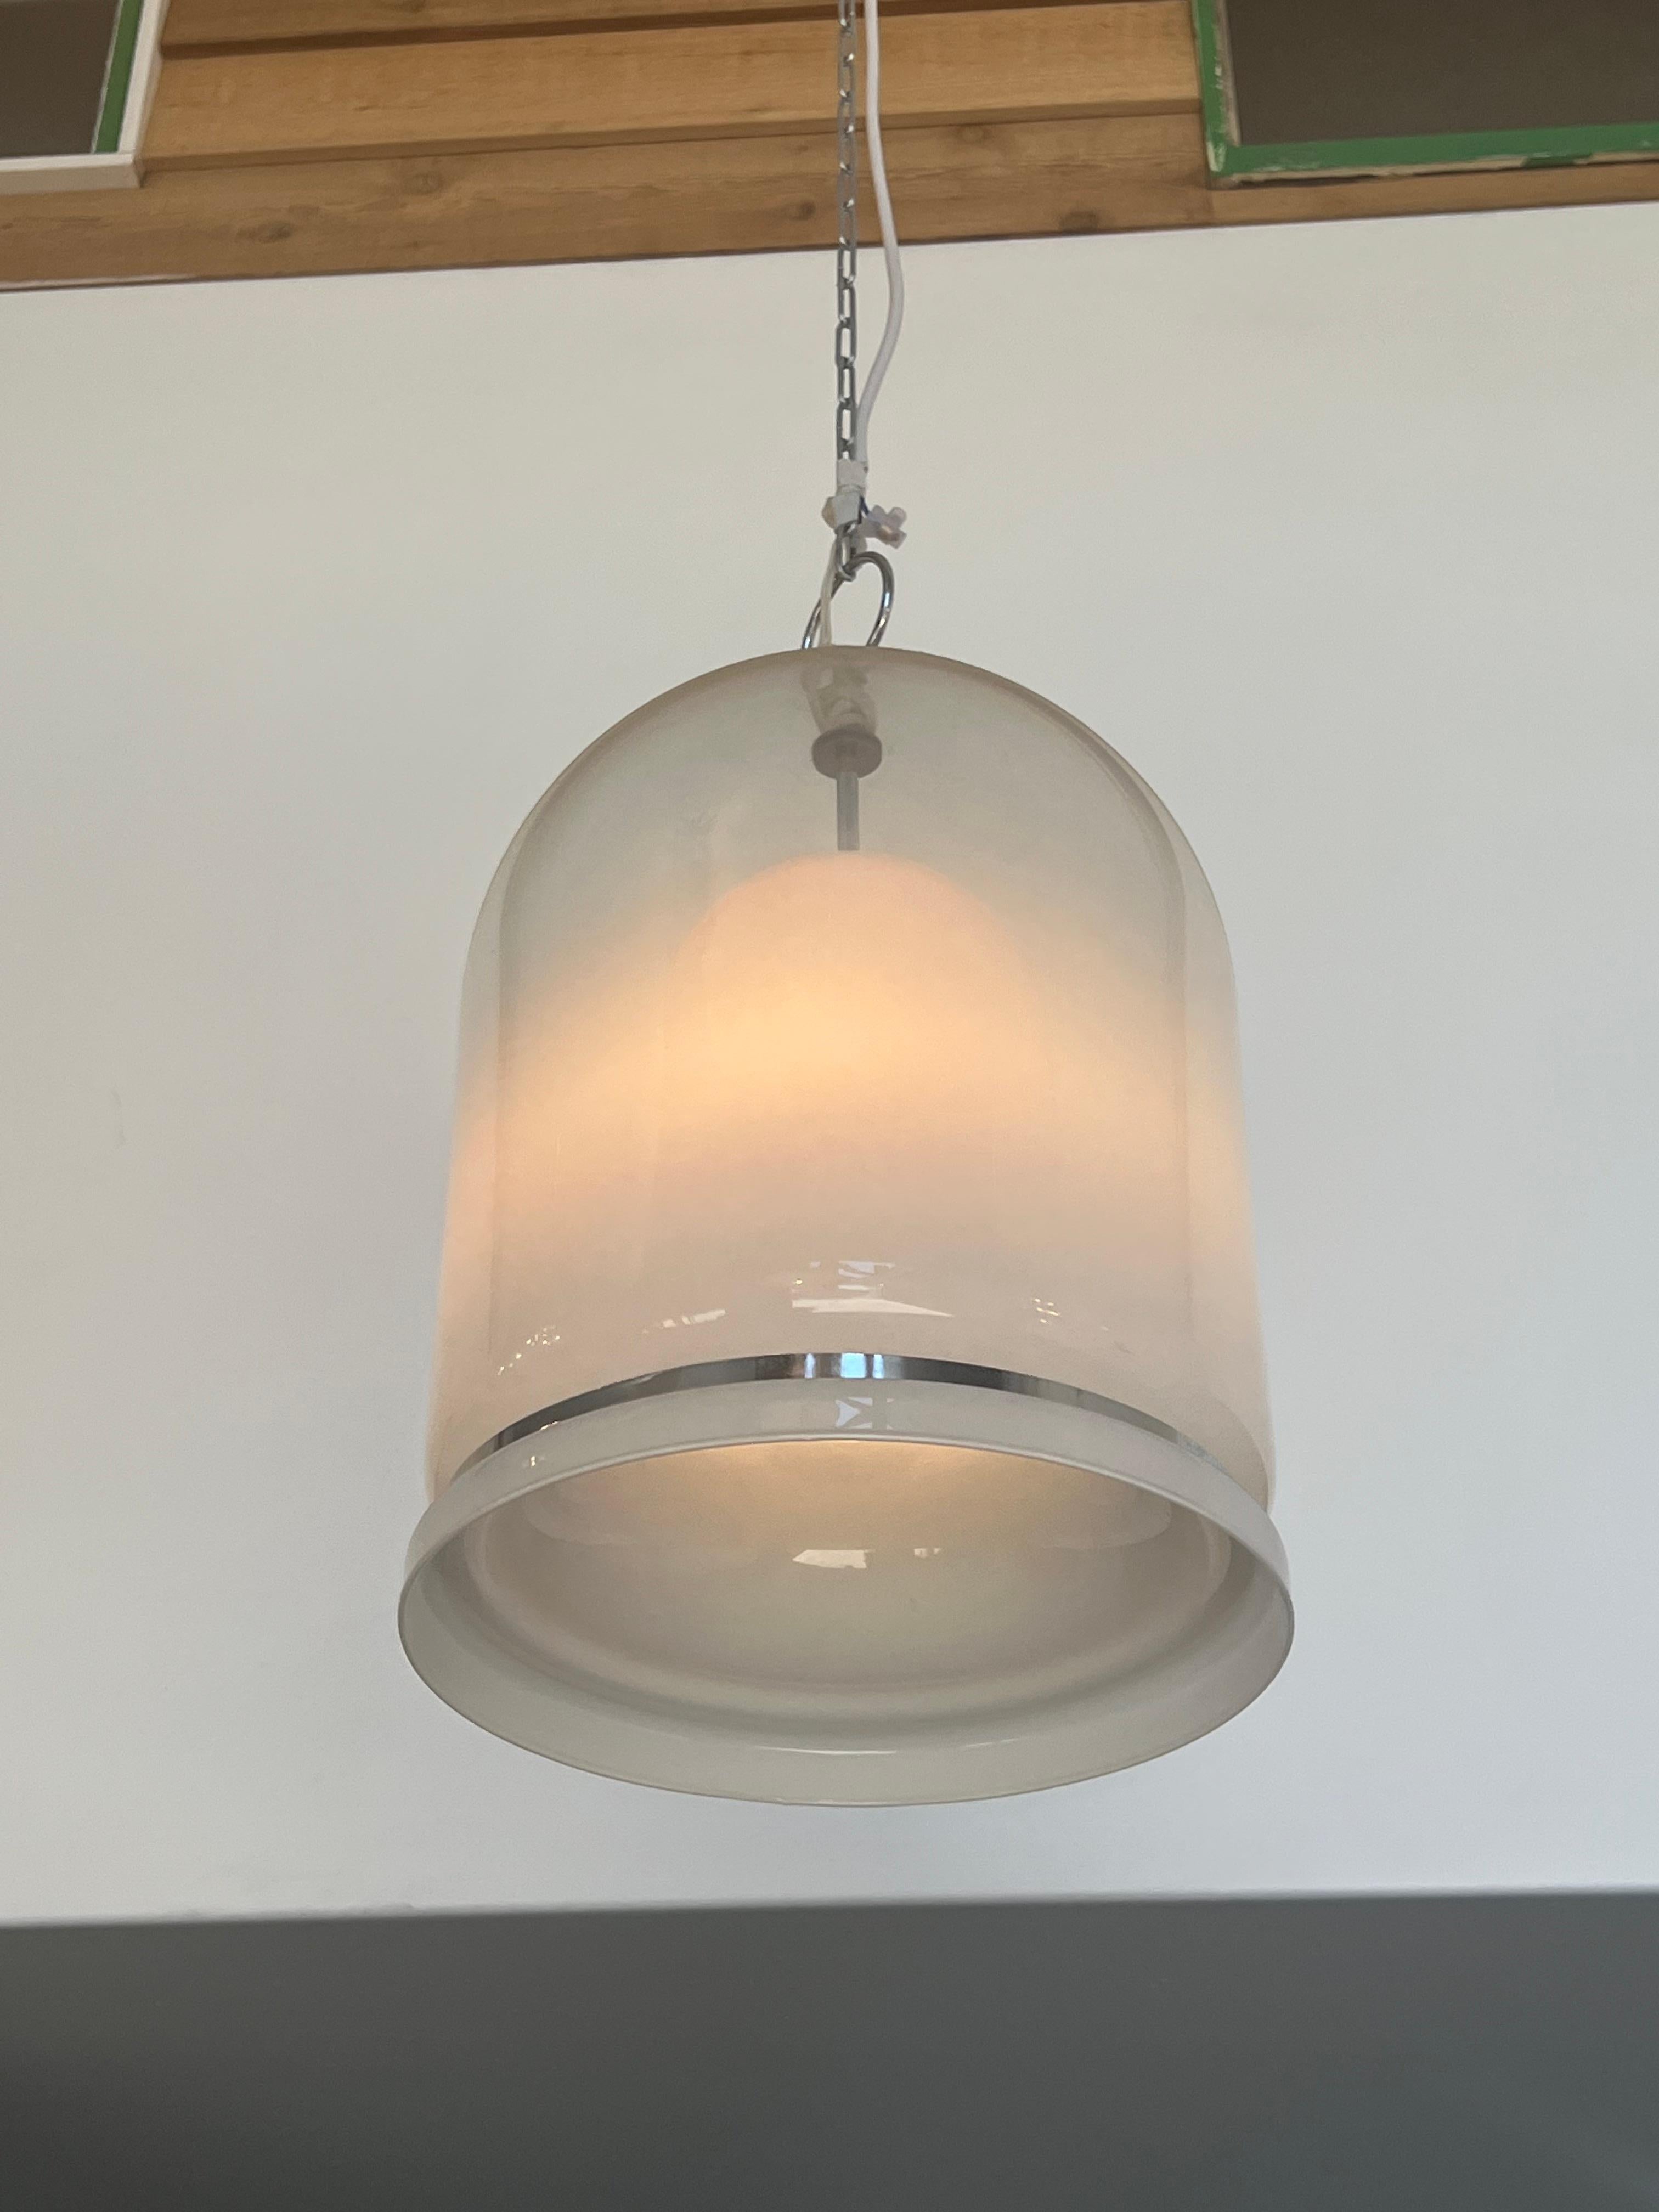 Mid Century Modern Italian bell pendant light made from Murano glass.